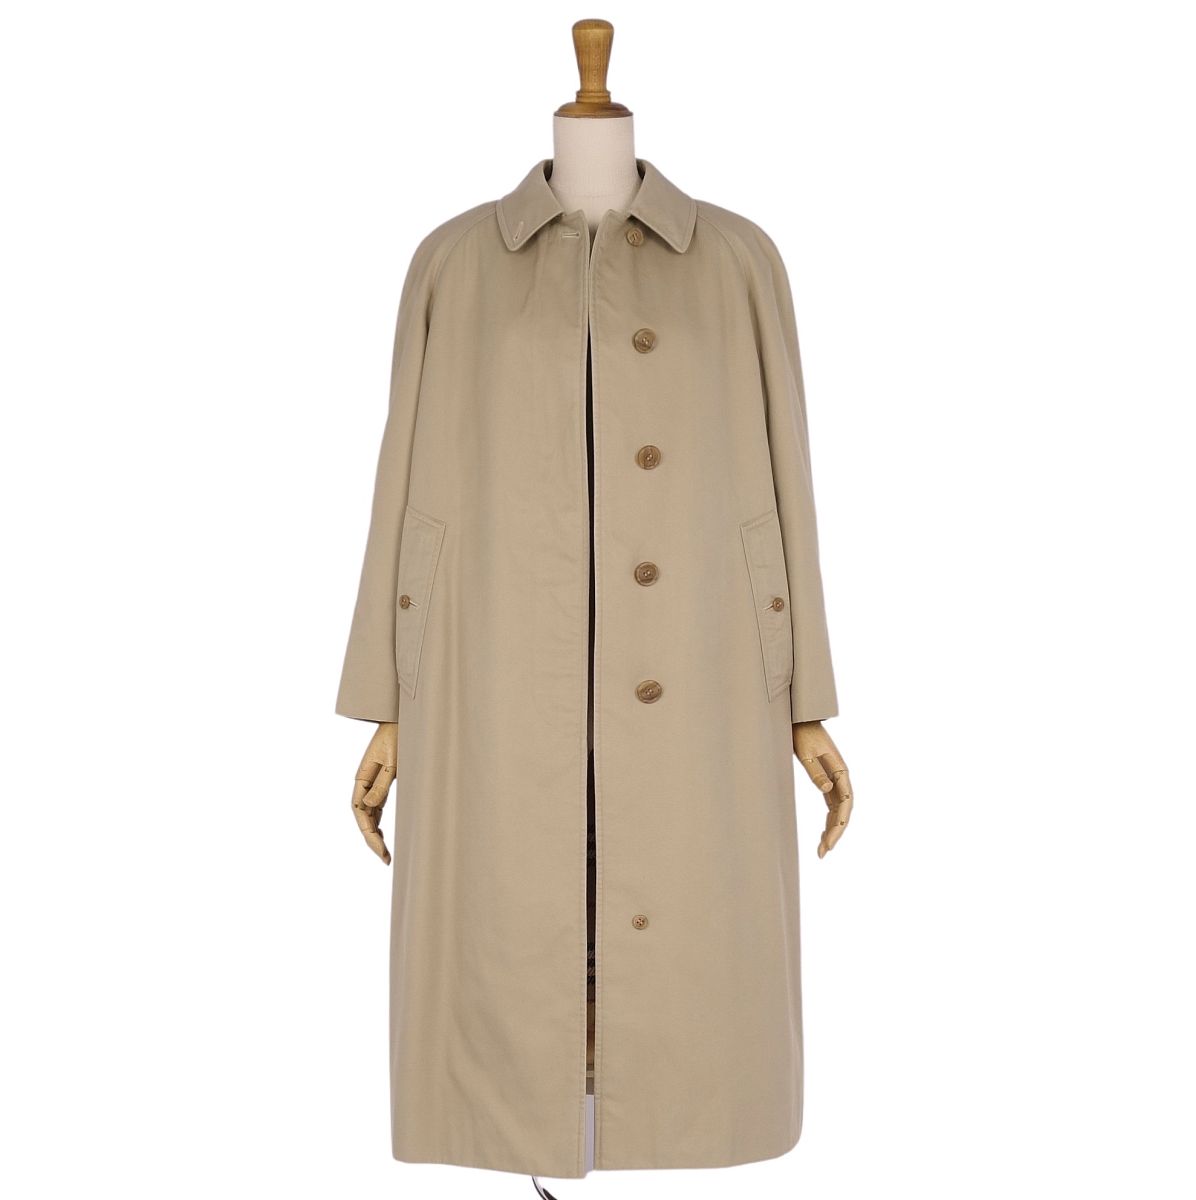 Vint Burberry s Coat  Coat Balmacorn Coat Back Check Liner   S Equivalent (Disappeared) Karkebejee